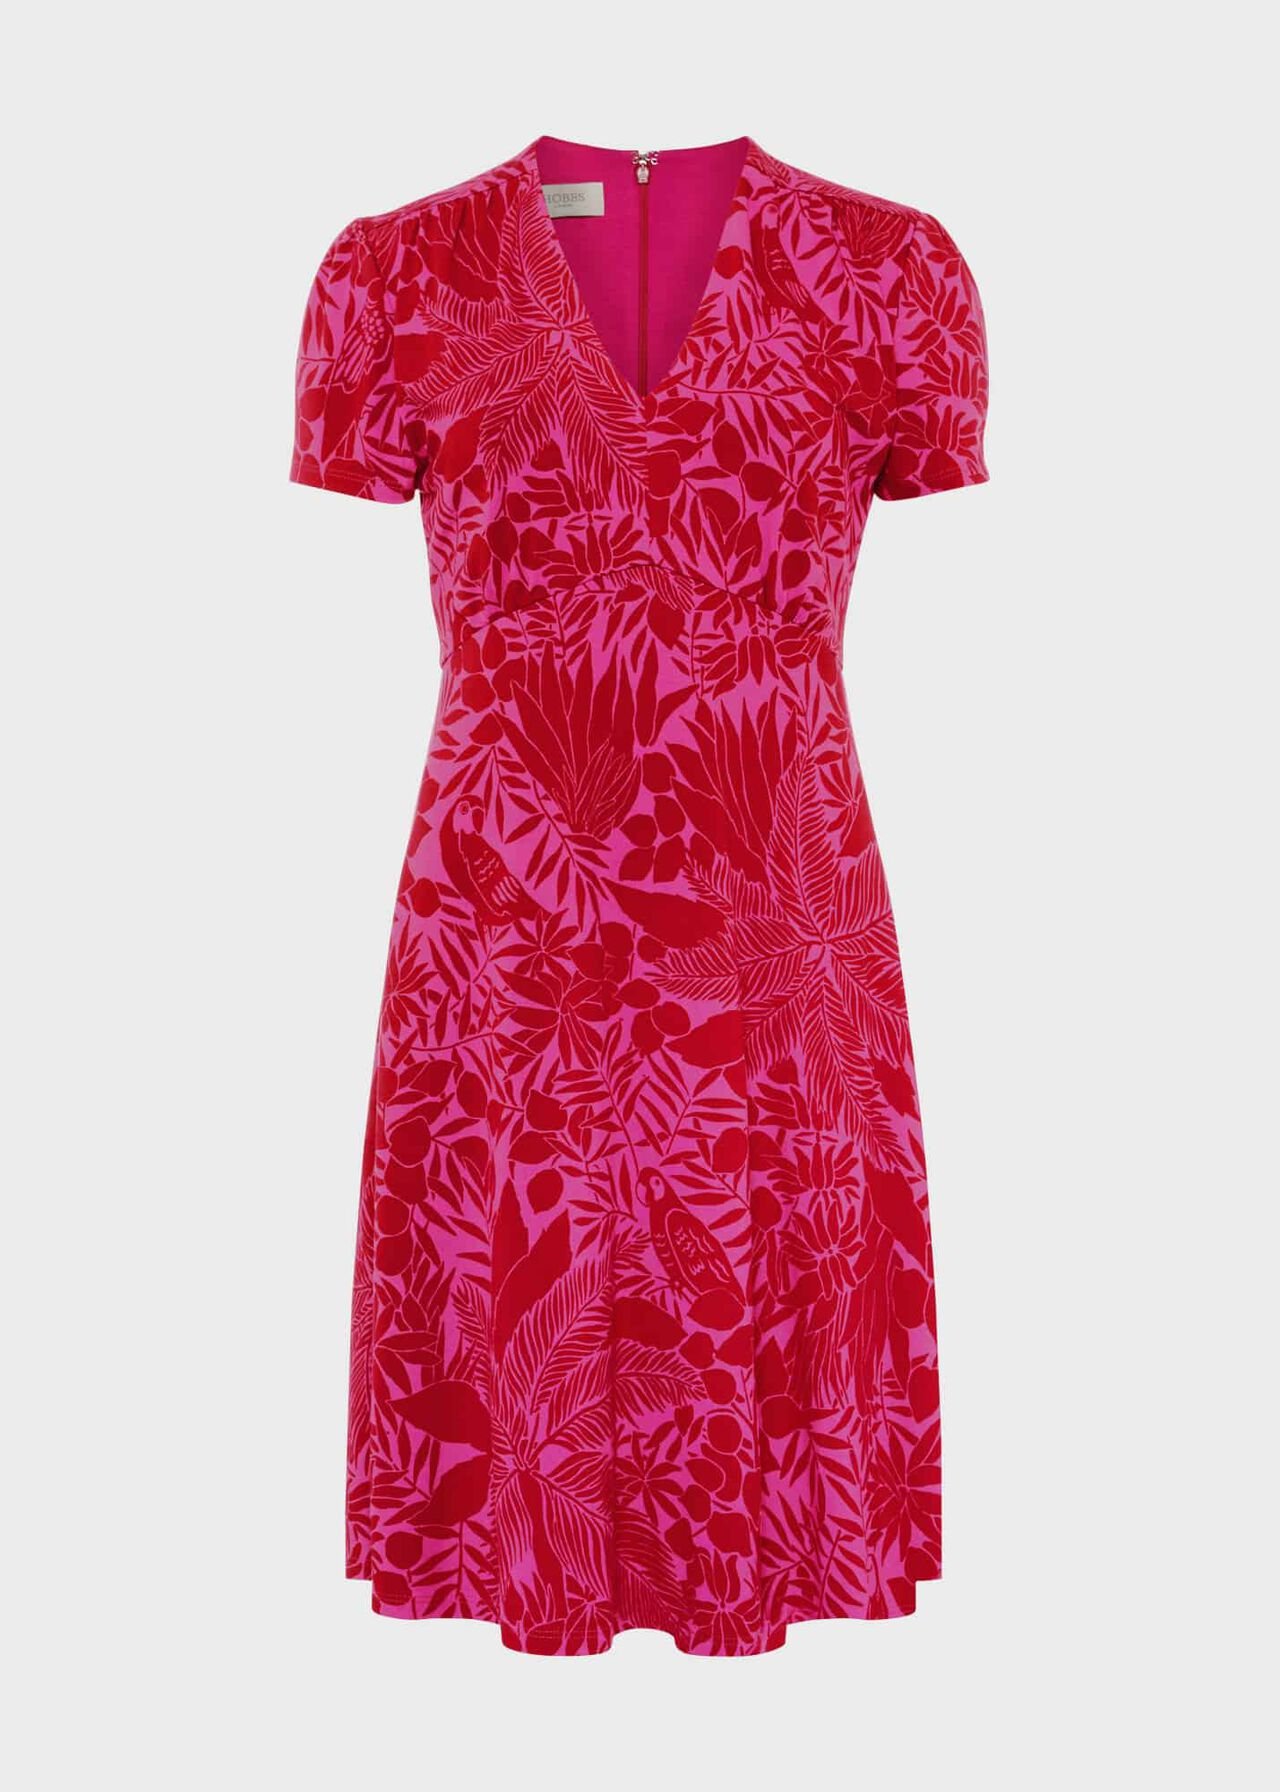 Ann Jersey Dress, Red Pink, hi-res